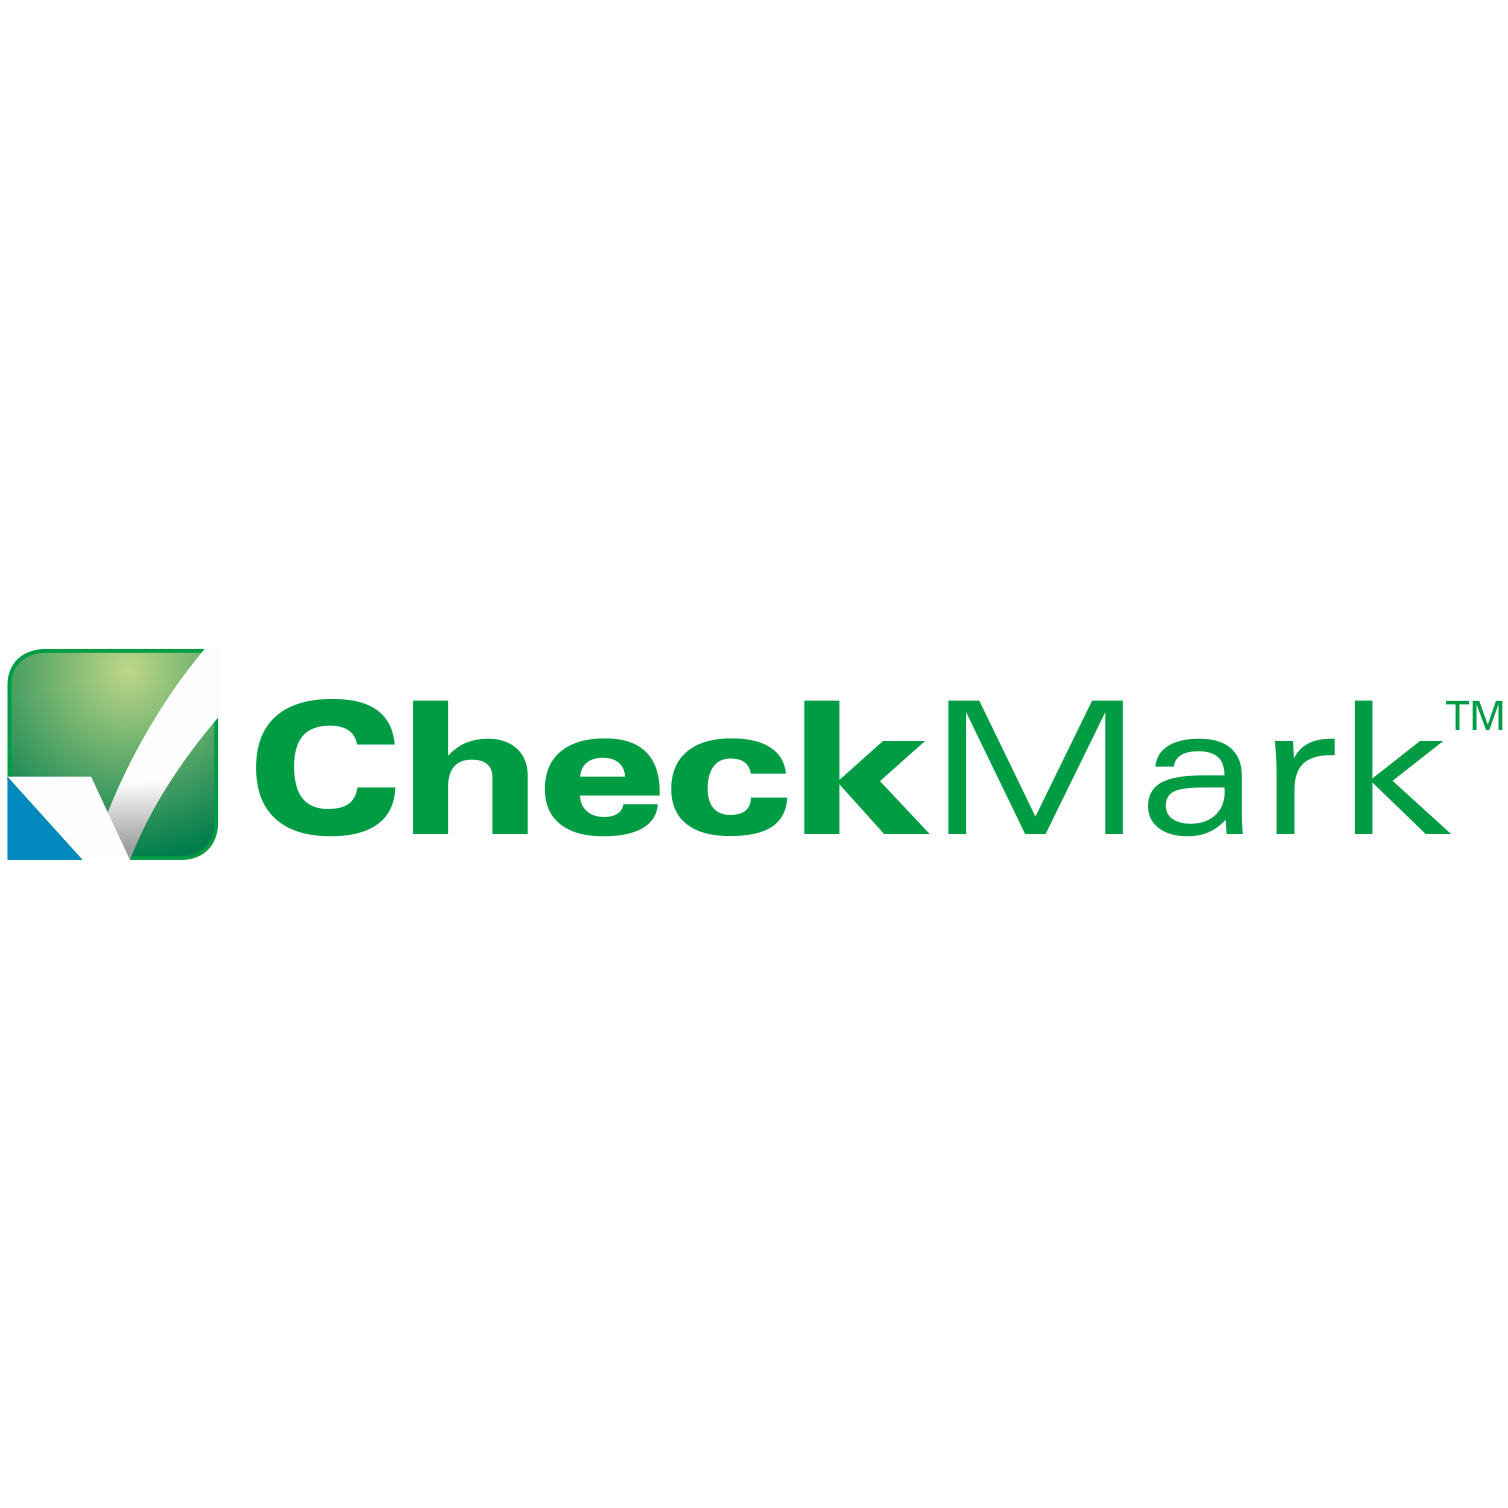 CheckMark[1]